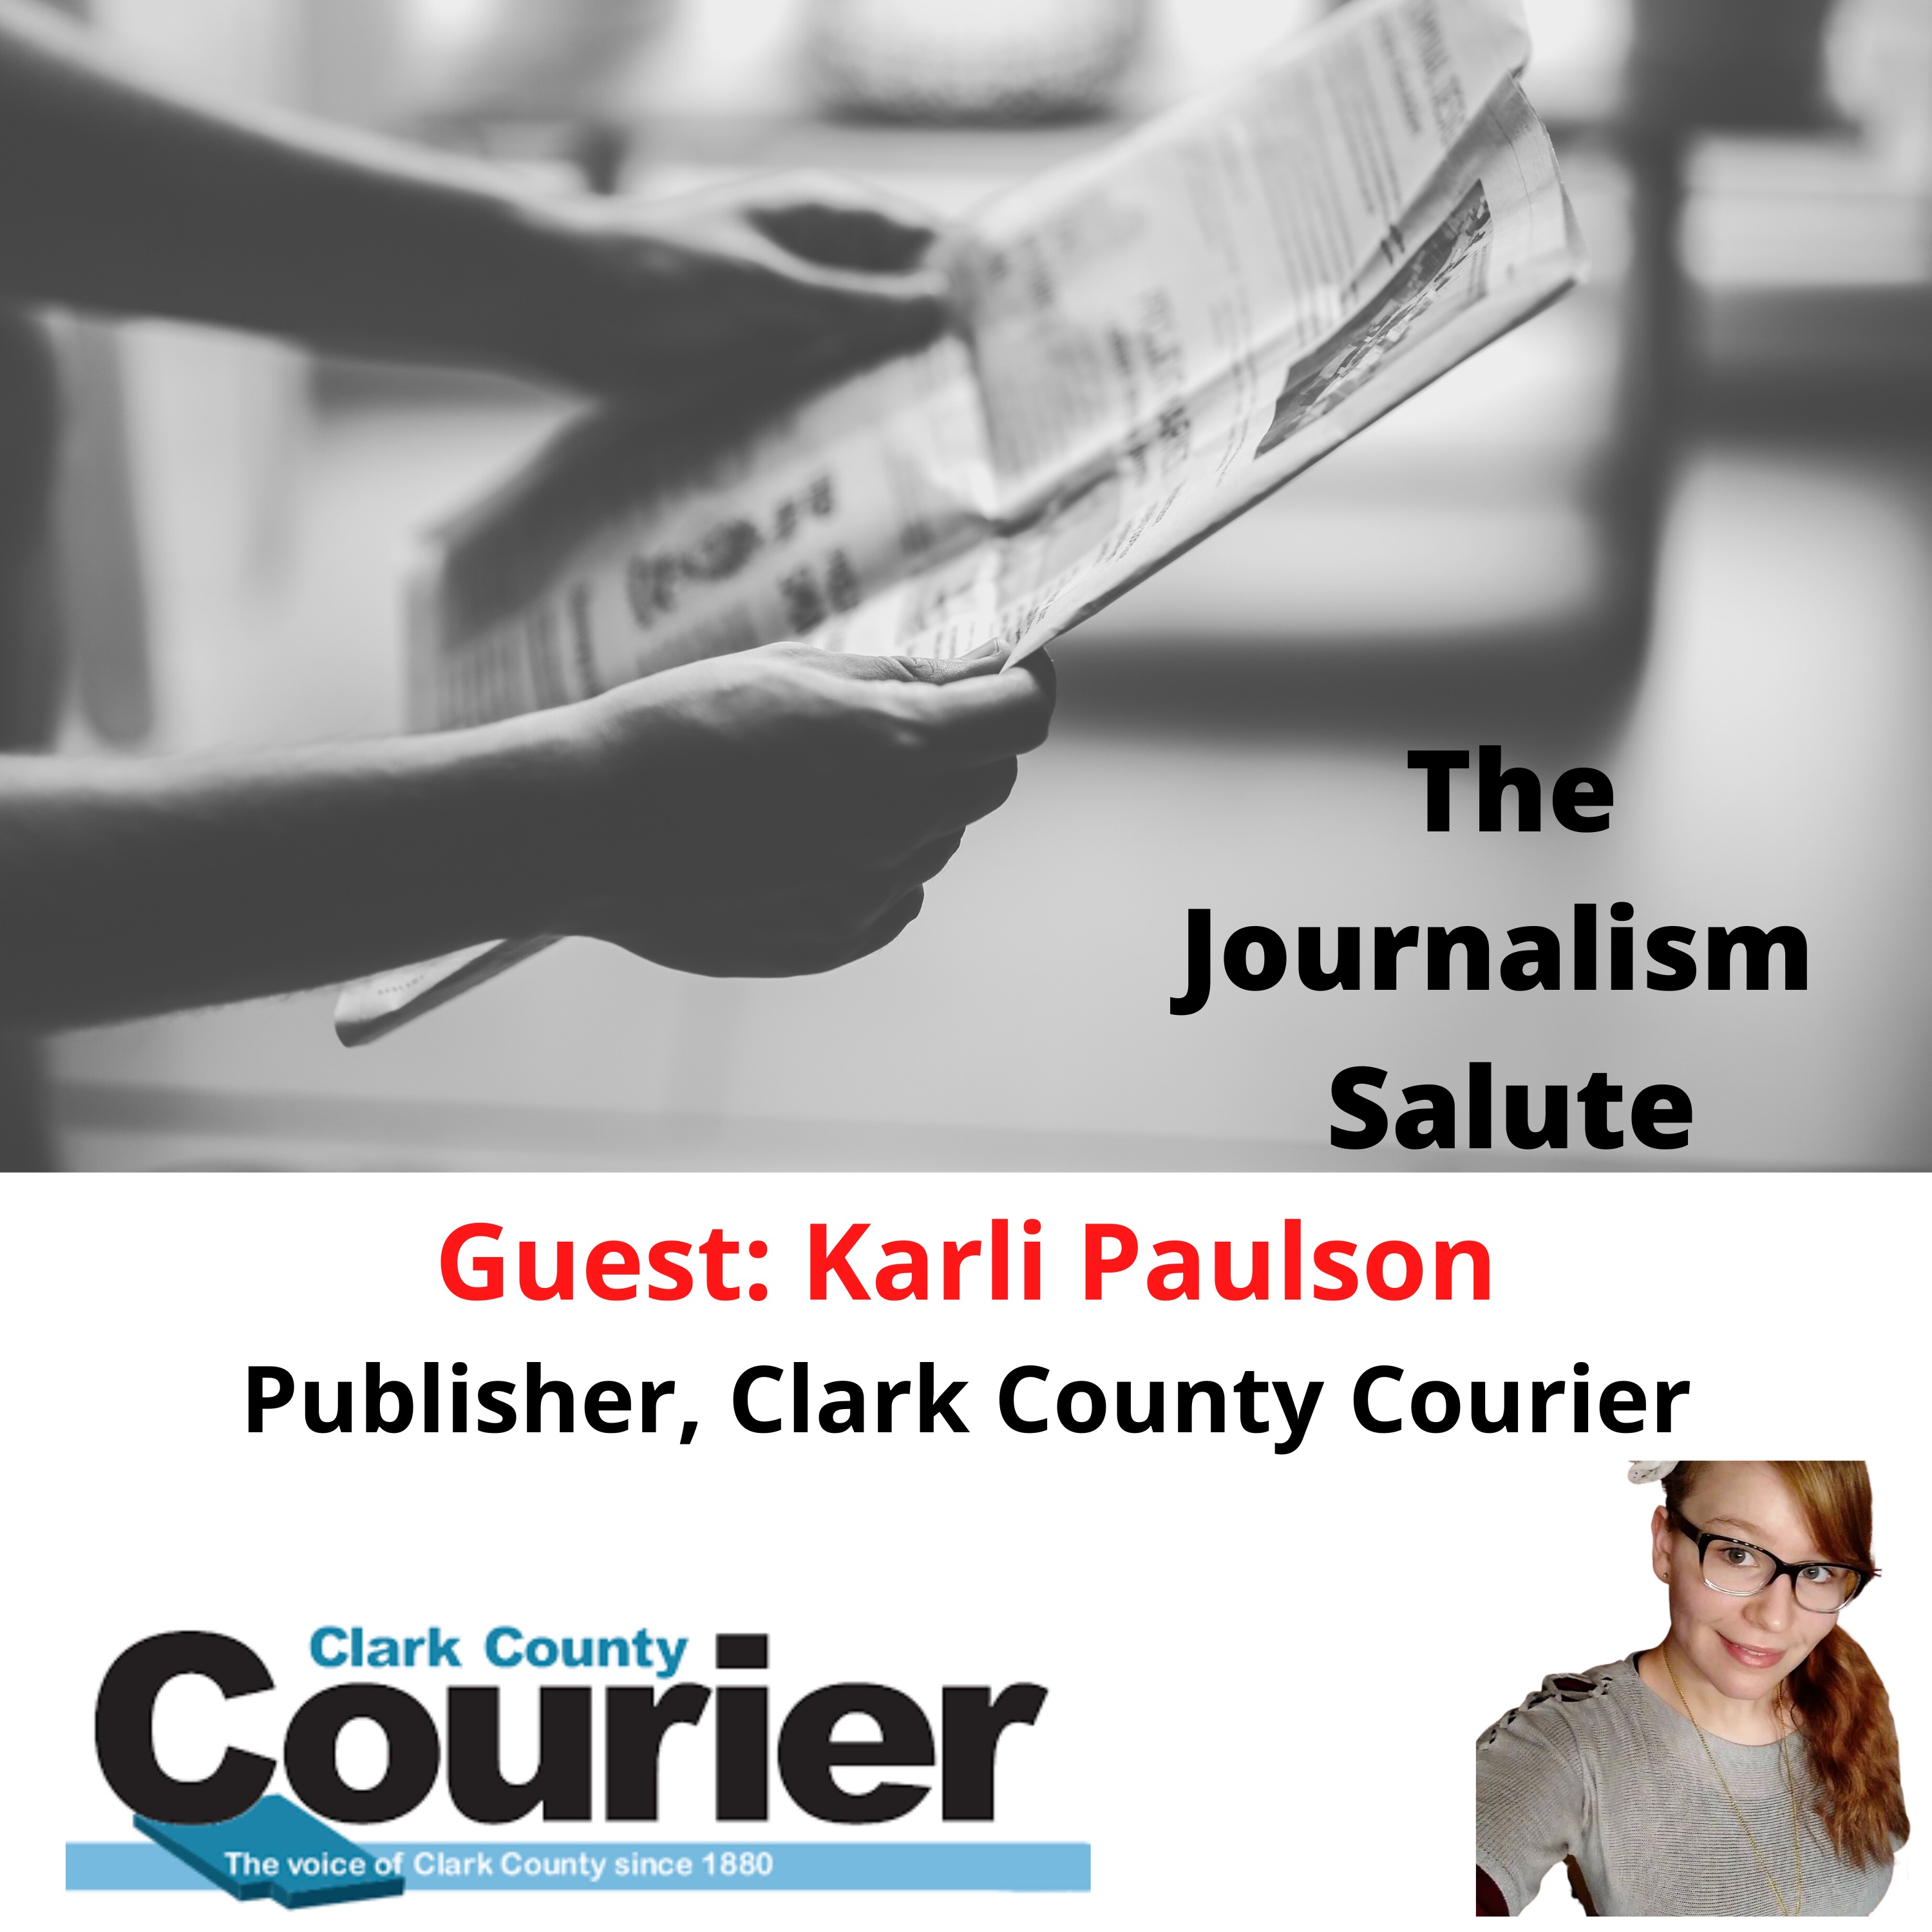 Karli Paulson, Publisher: Clark County Courier